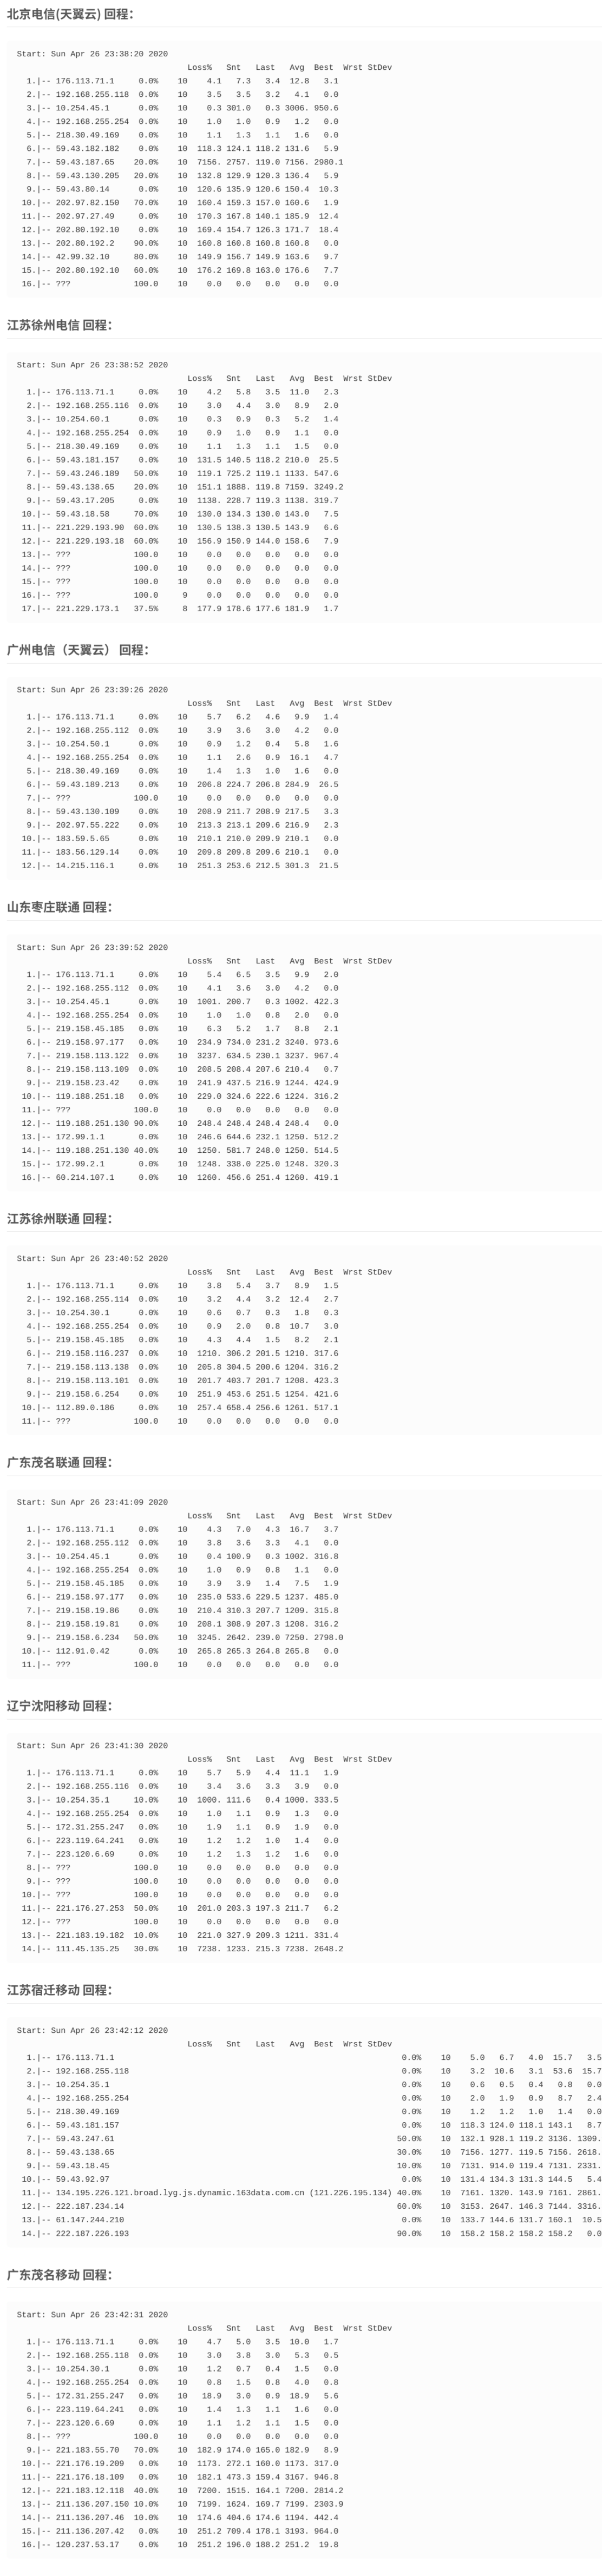 Hostyun - 圣何塞CN2 GIA - KVM架构 - 月付 ￥35